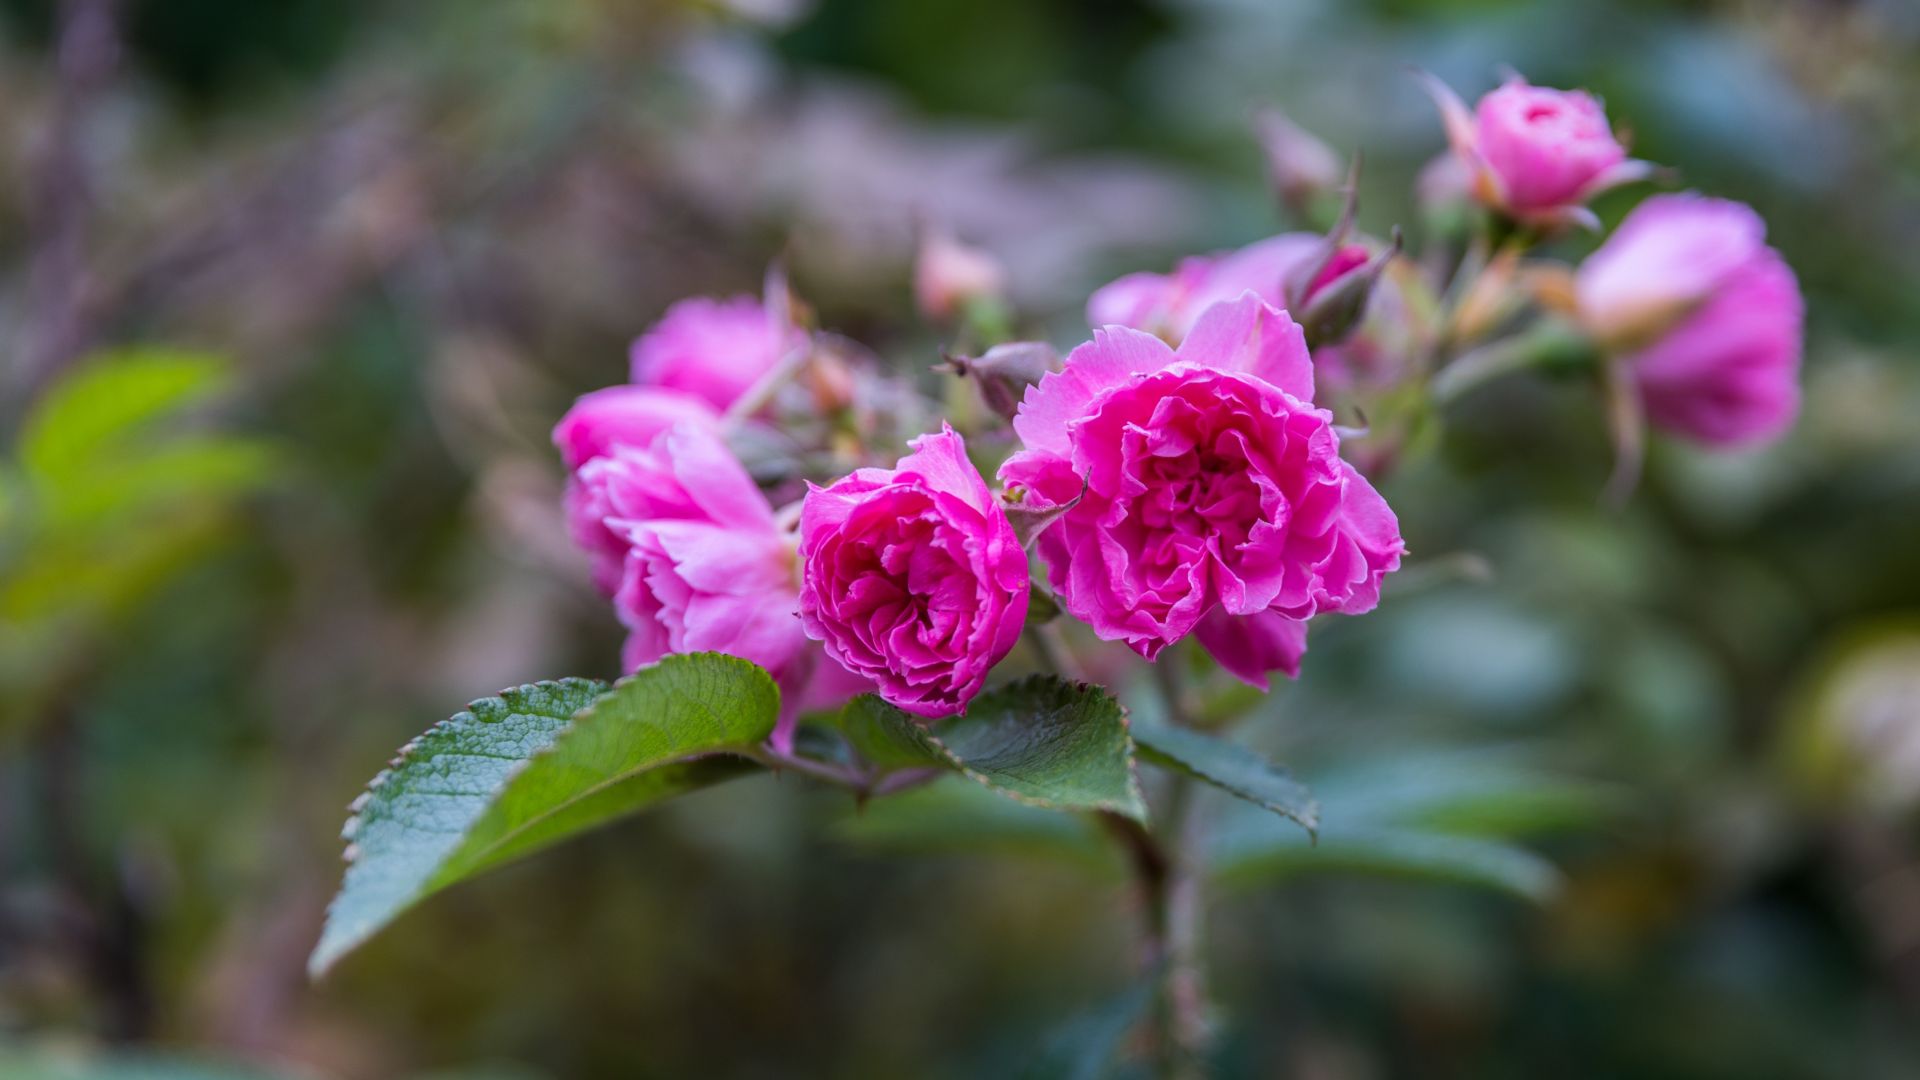 Desktop Wallpaper Blur, Pink Roses, Plants, Garden, 5k, Hd Image, Picture,  Background, 97c2d3